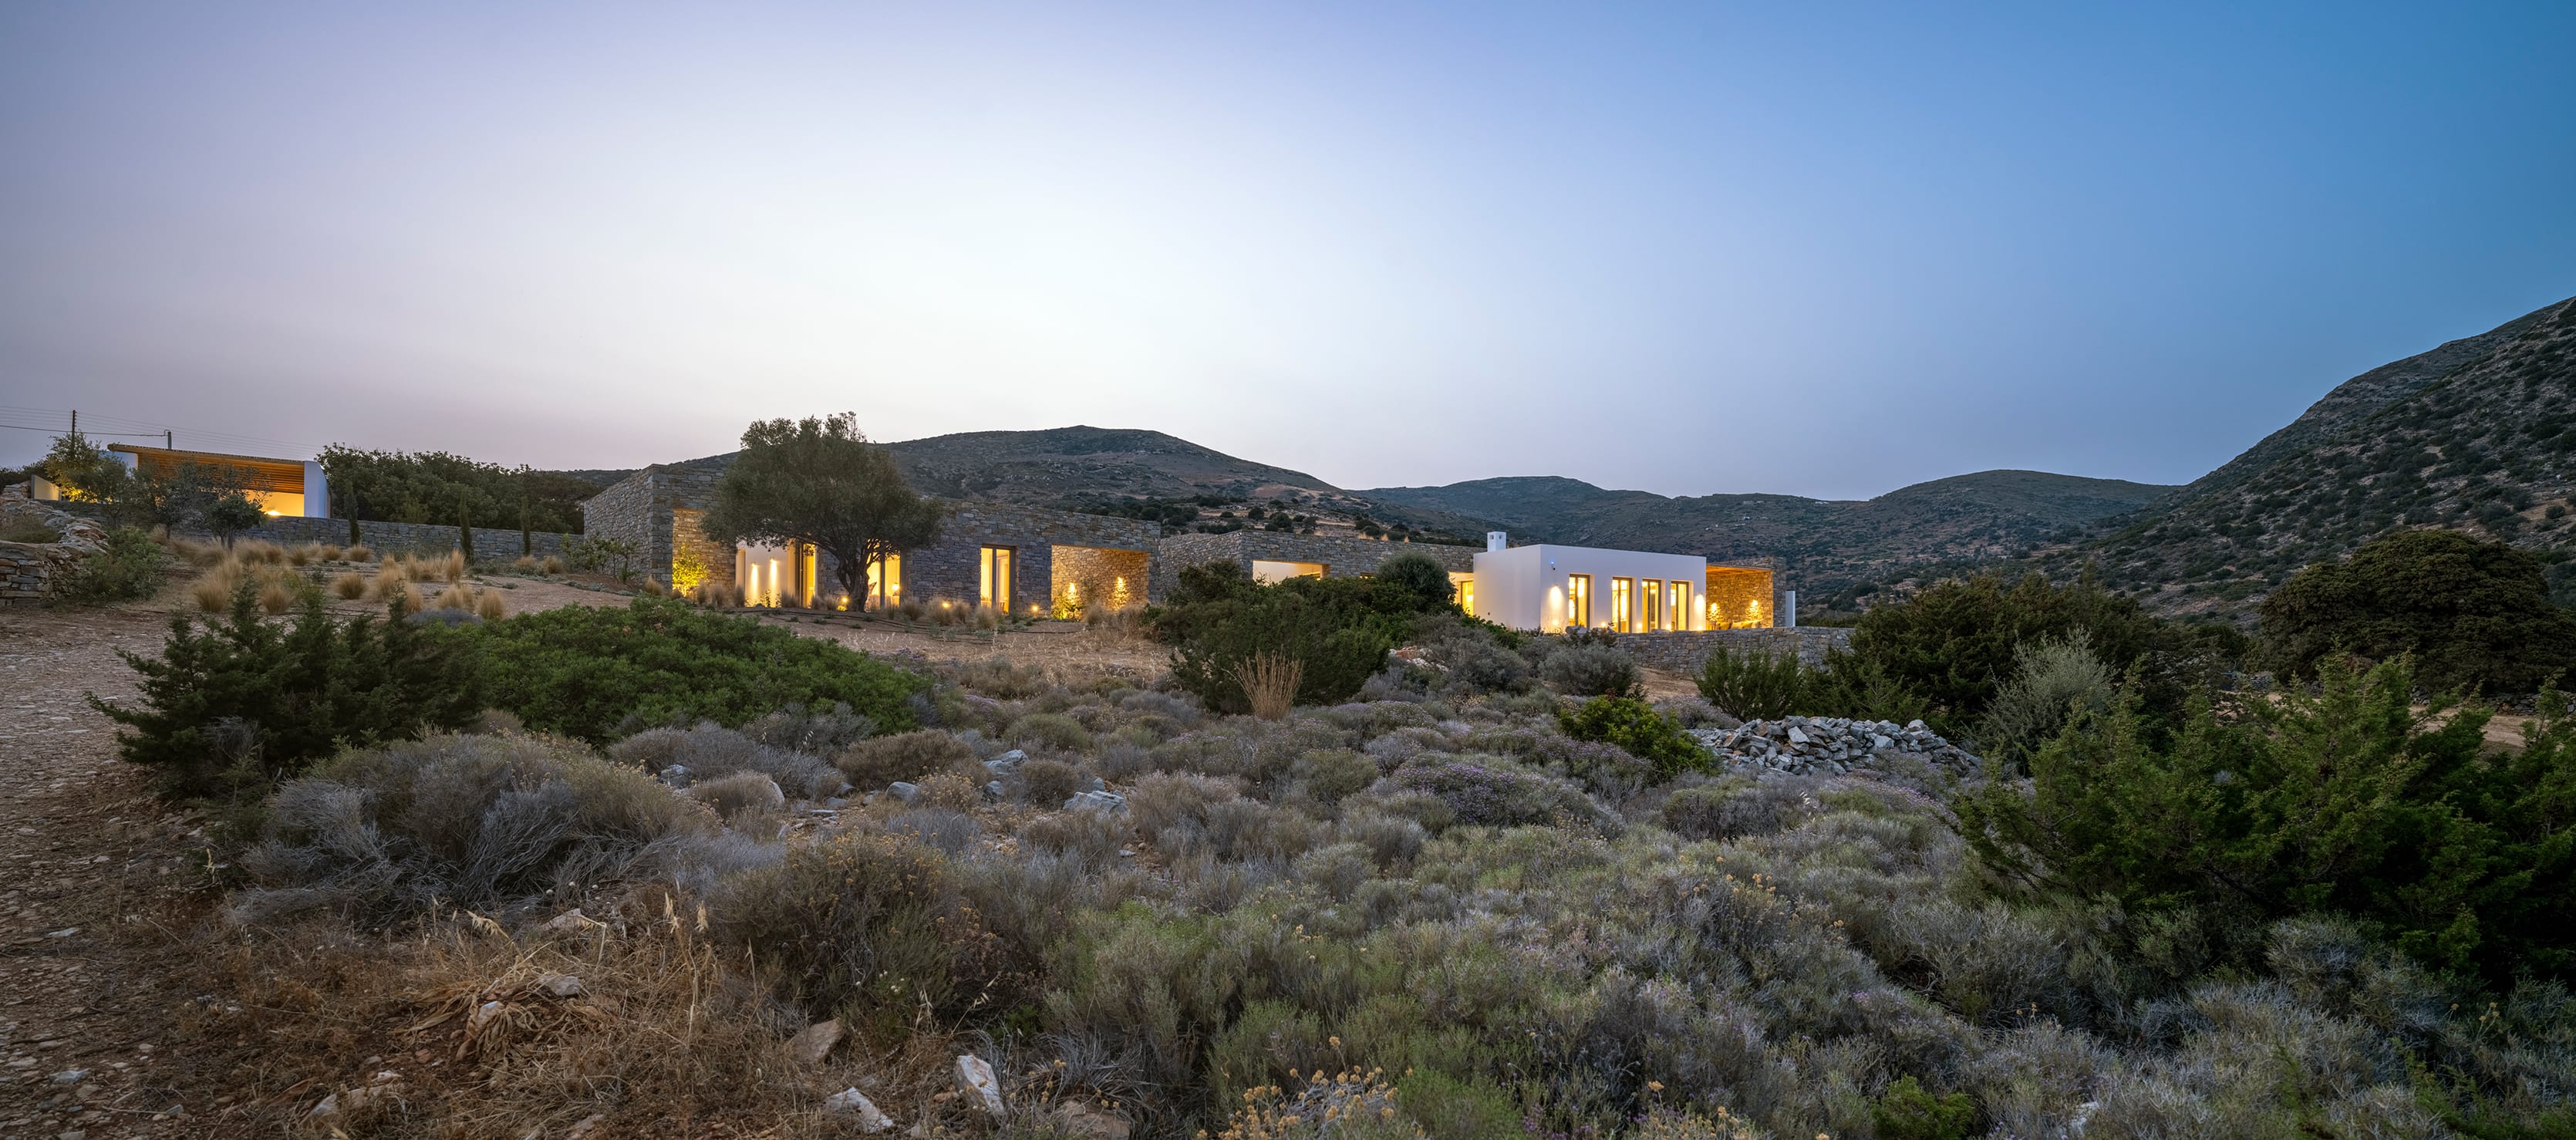 Evripiotis Architects--Cedar View House, Paros Island